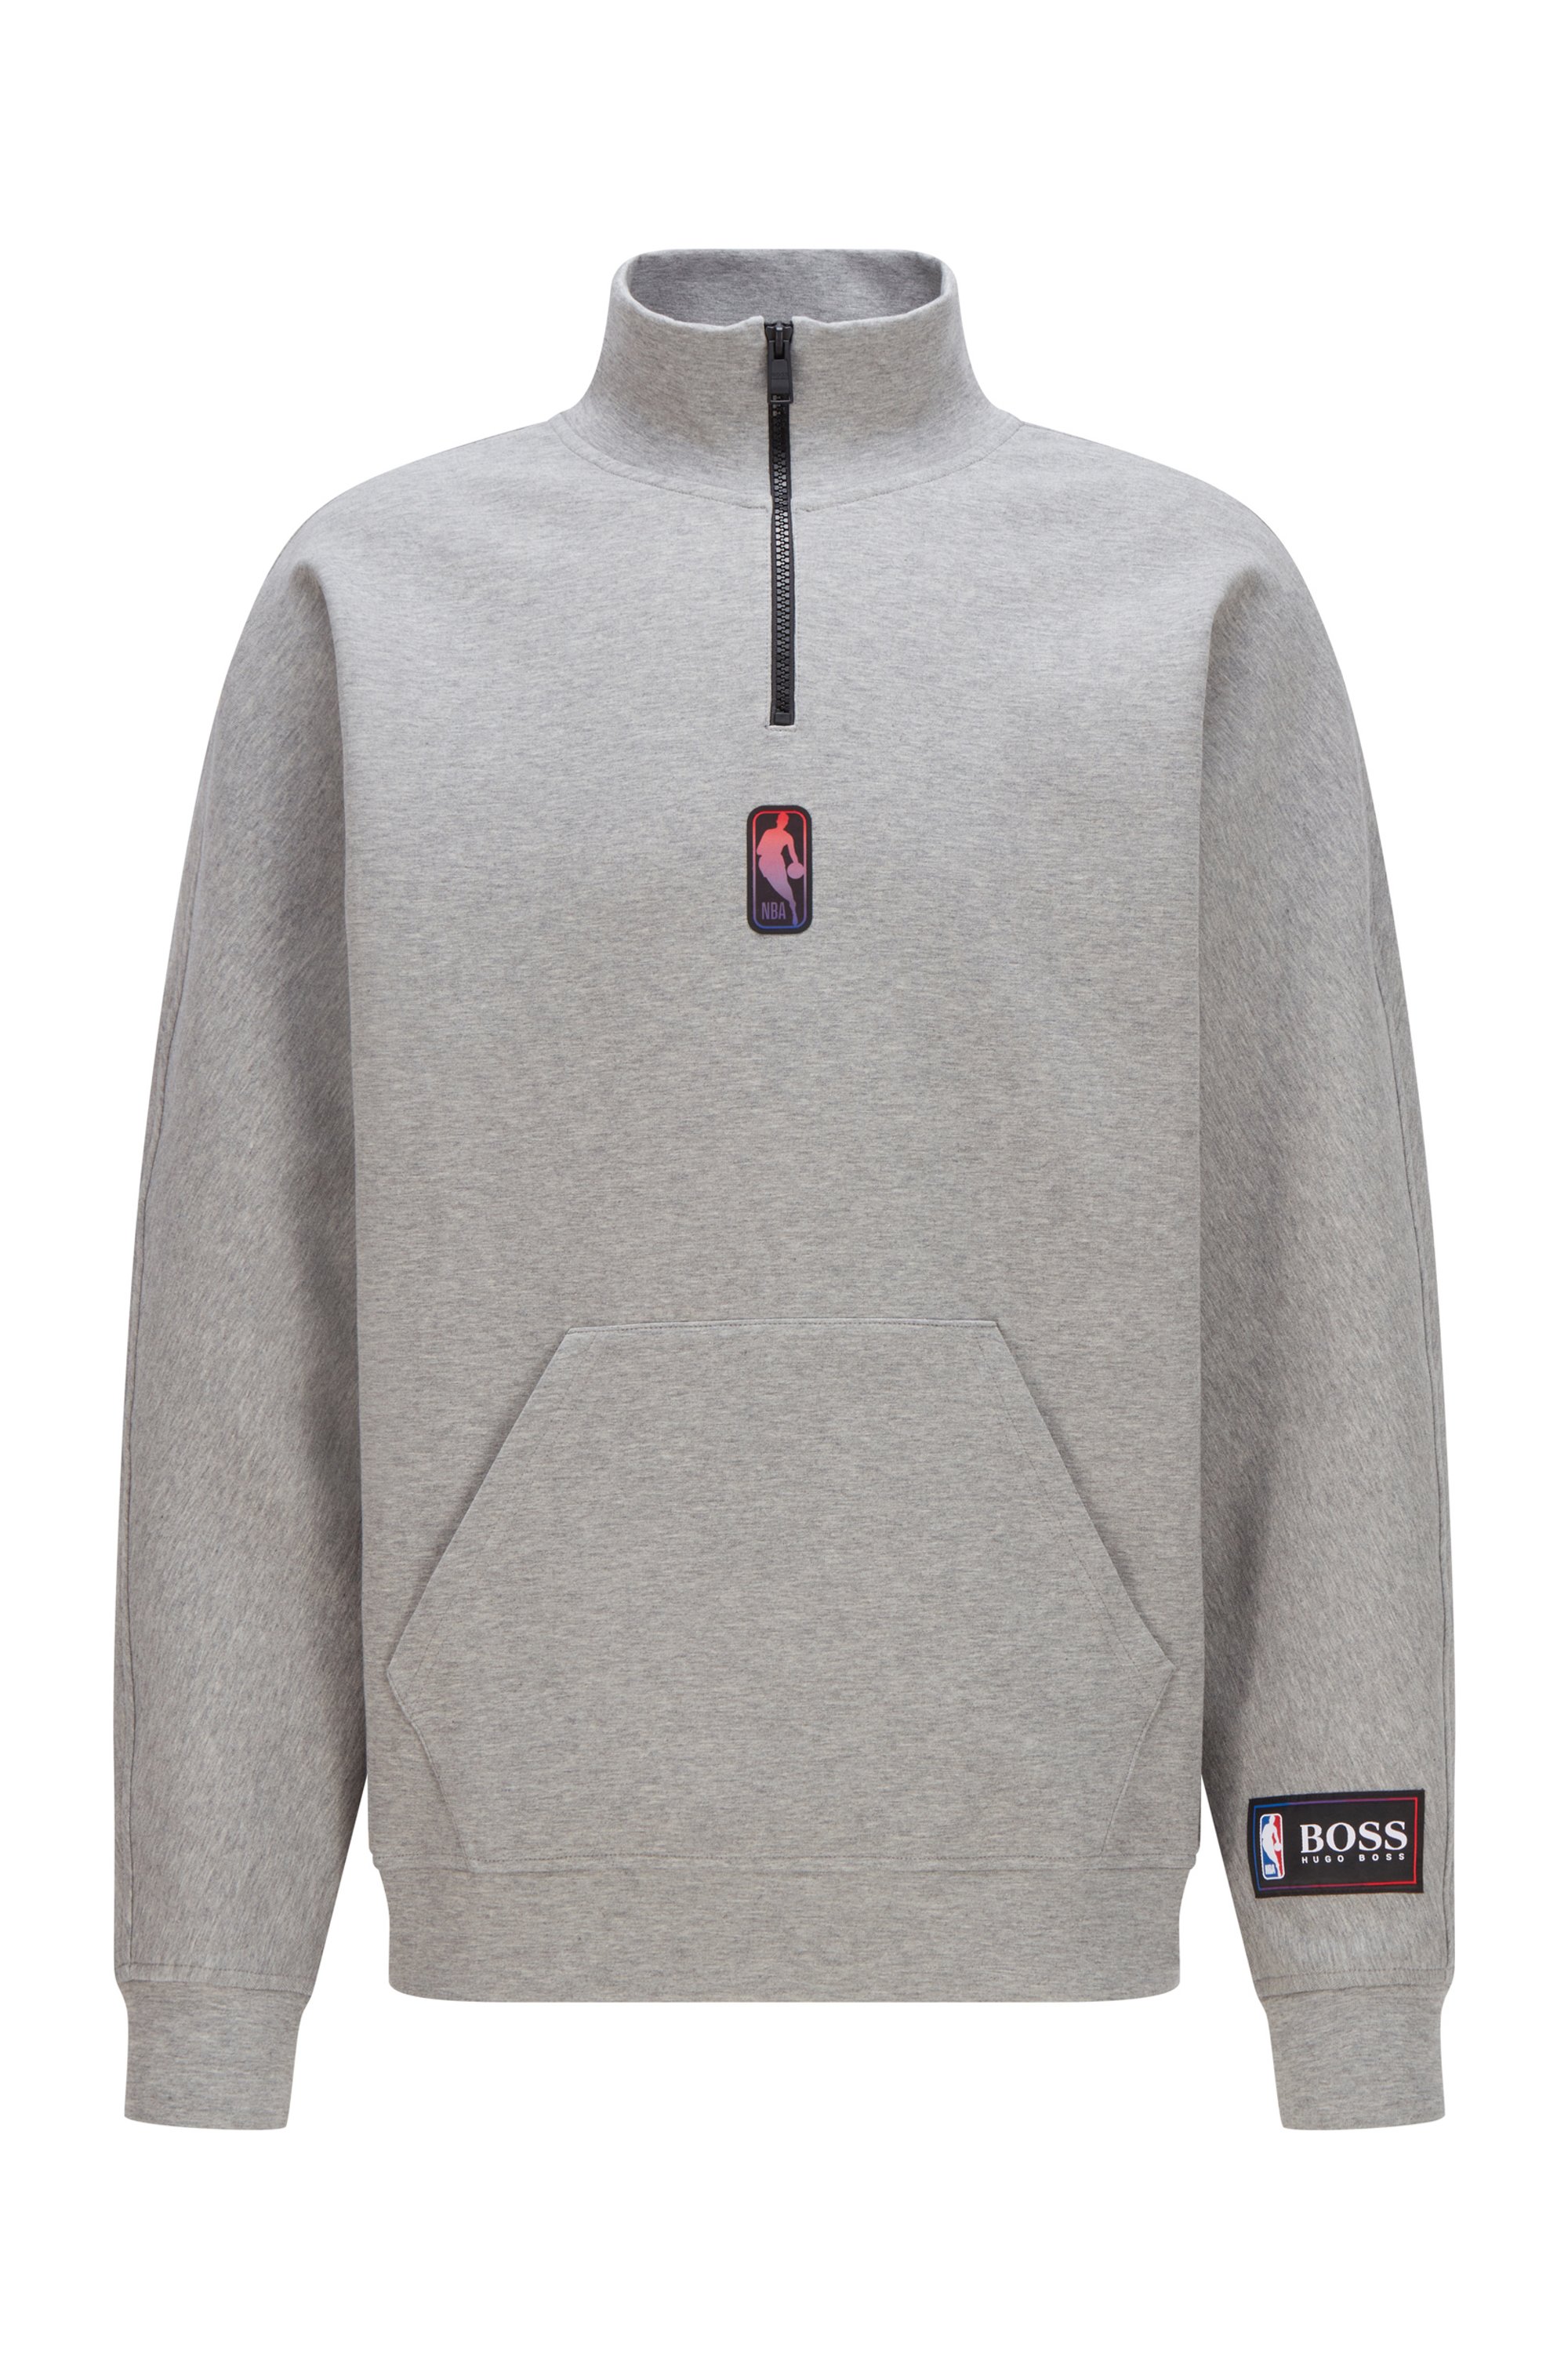 BOSS x NBA zip-neck sweatshirt with collaborative branding, NBA Generic